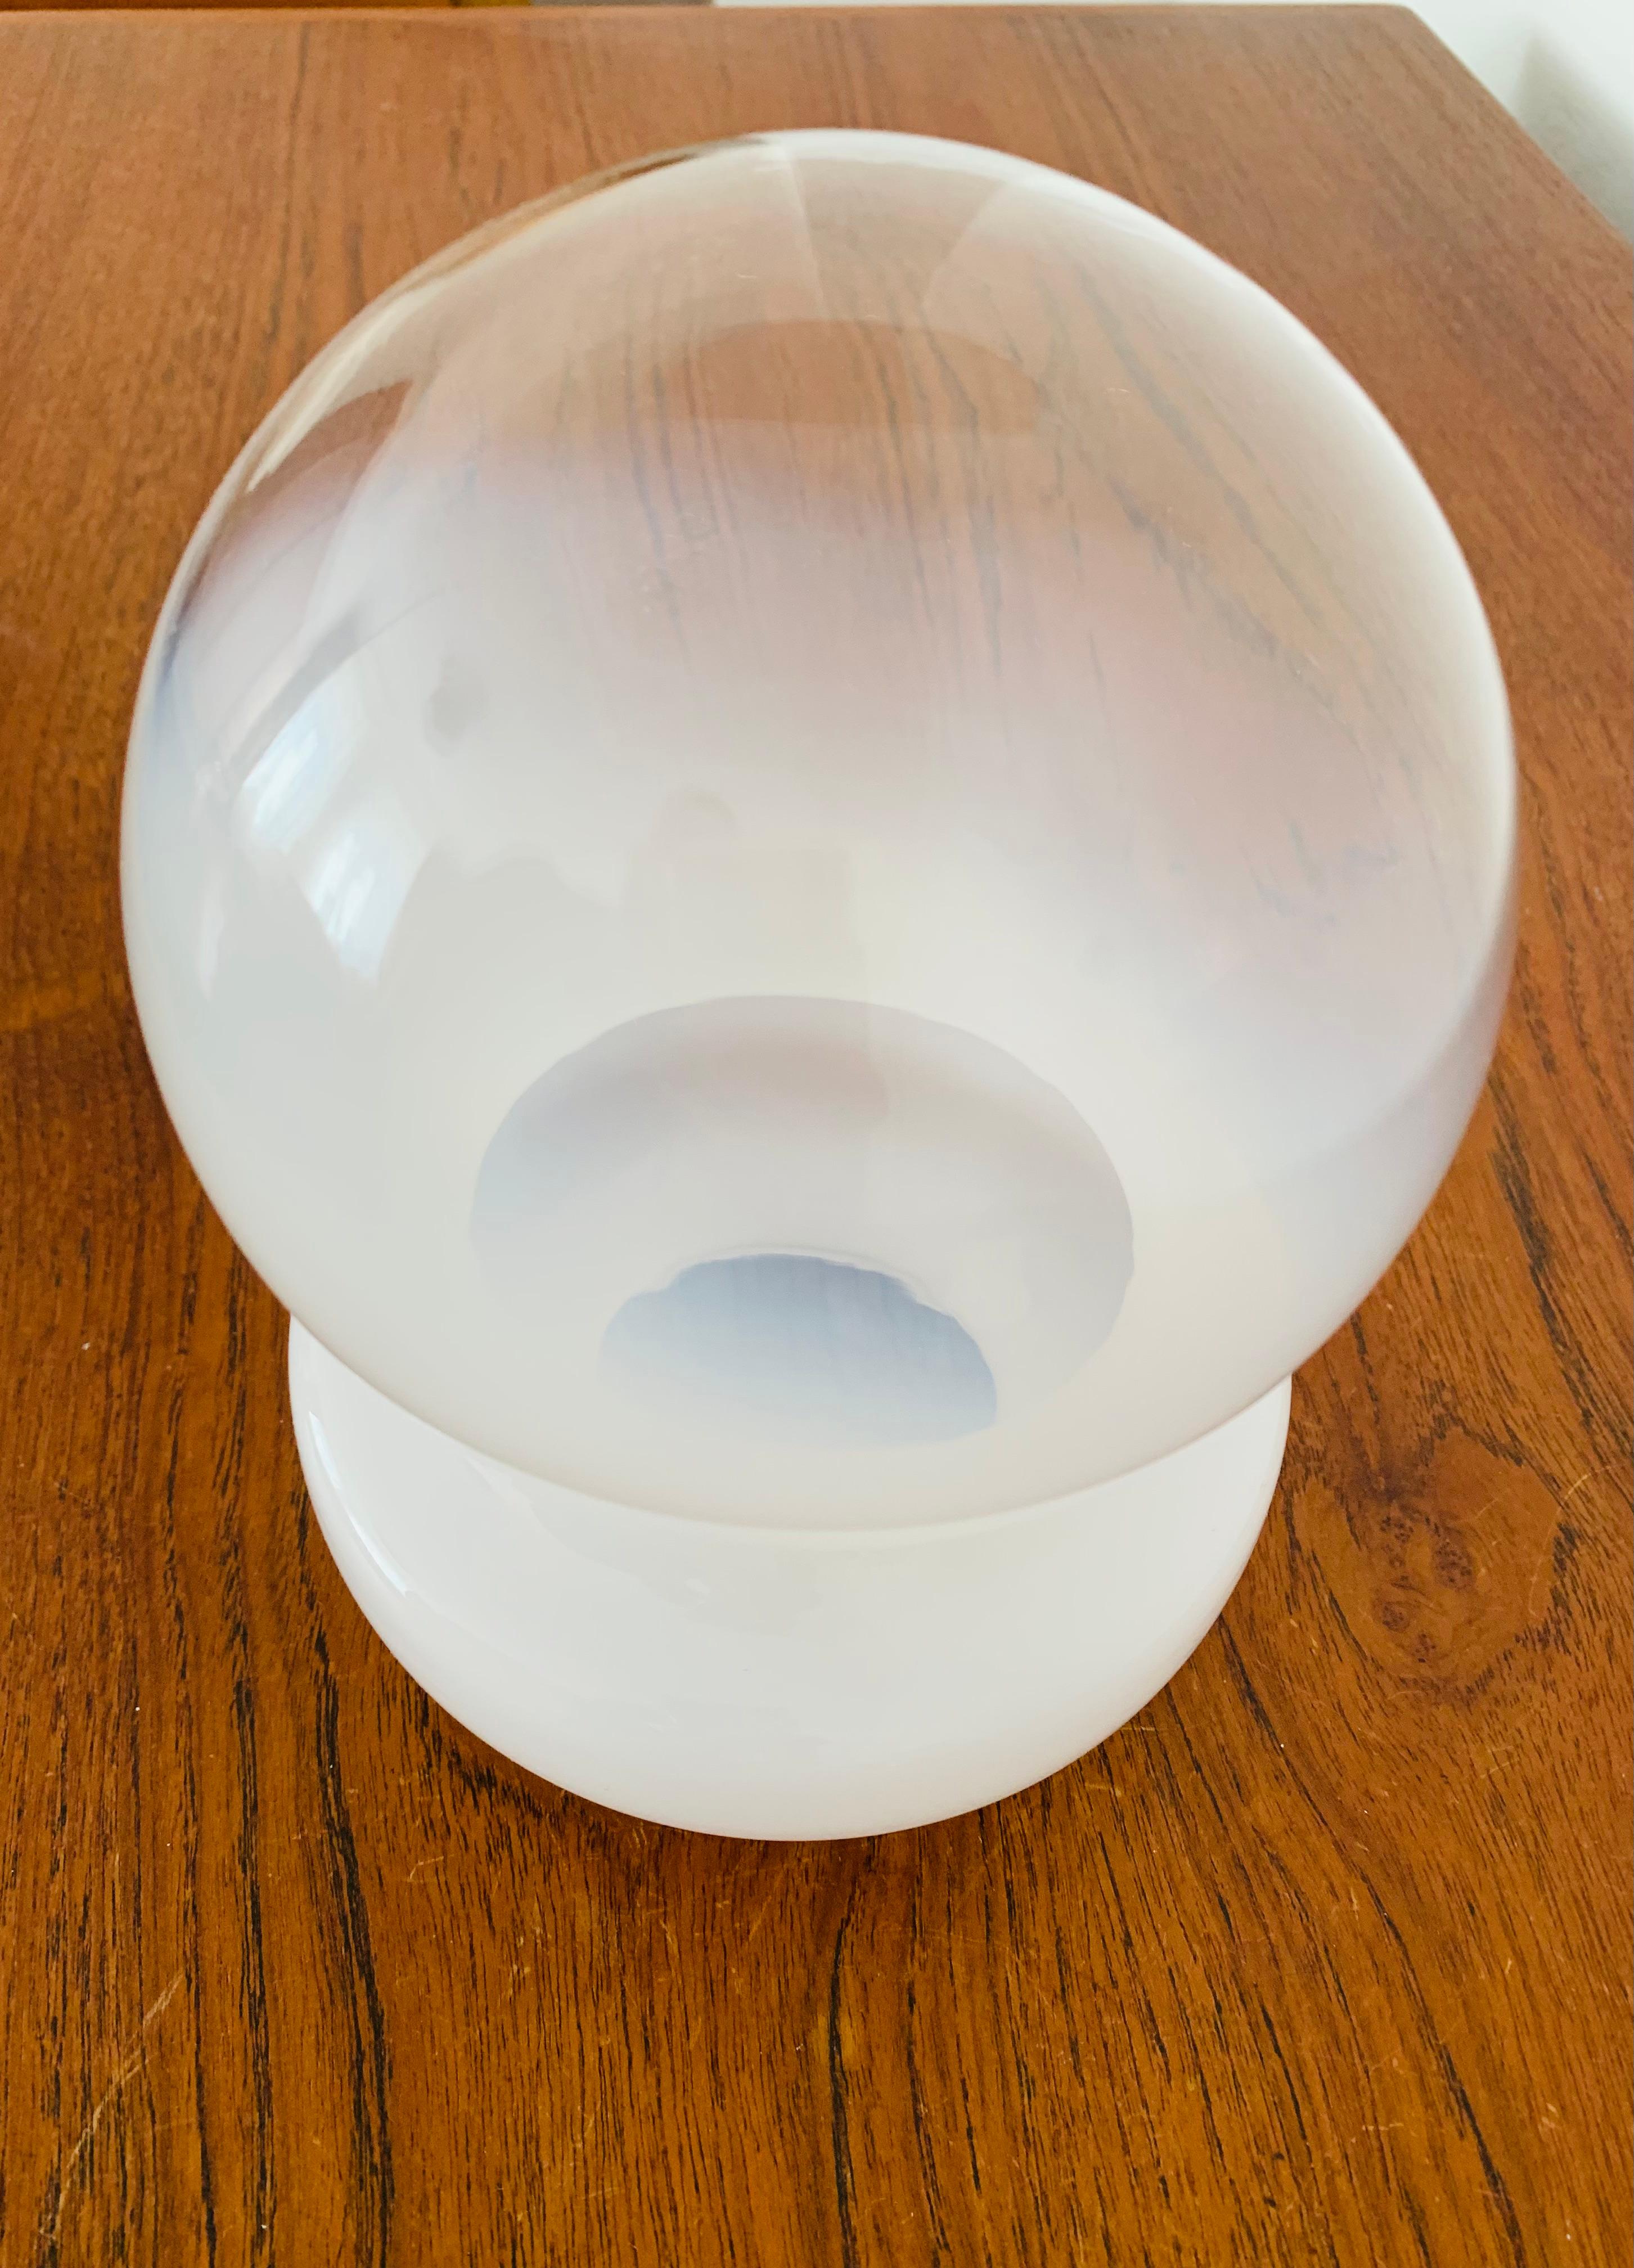 Metal Murano Glass Table Lamp For Sale